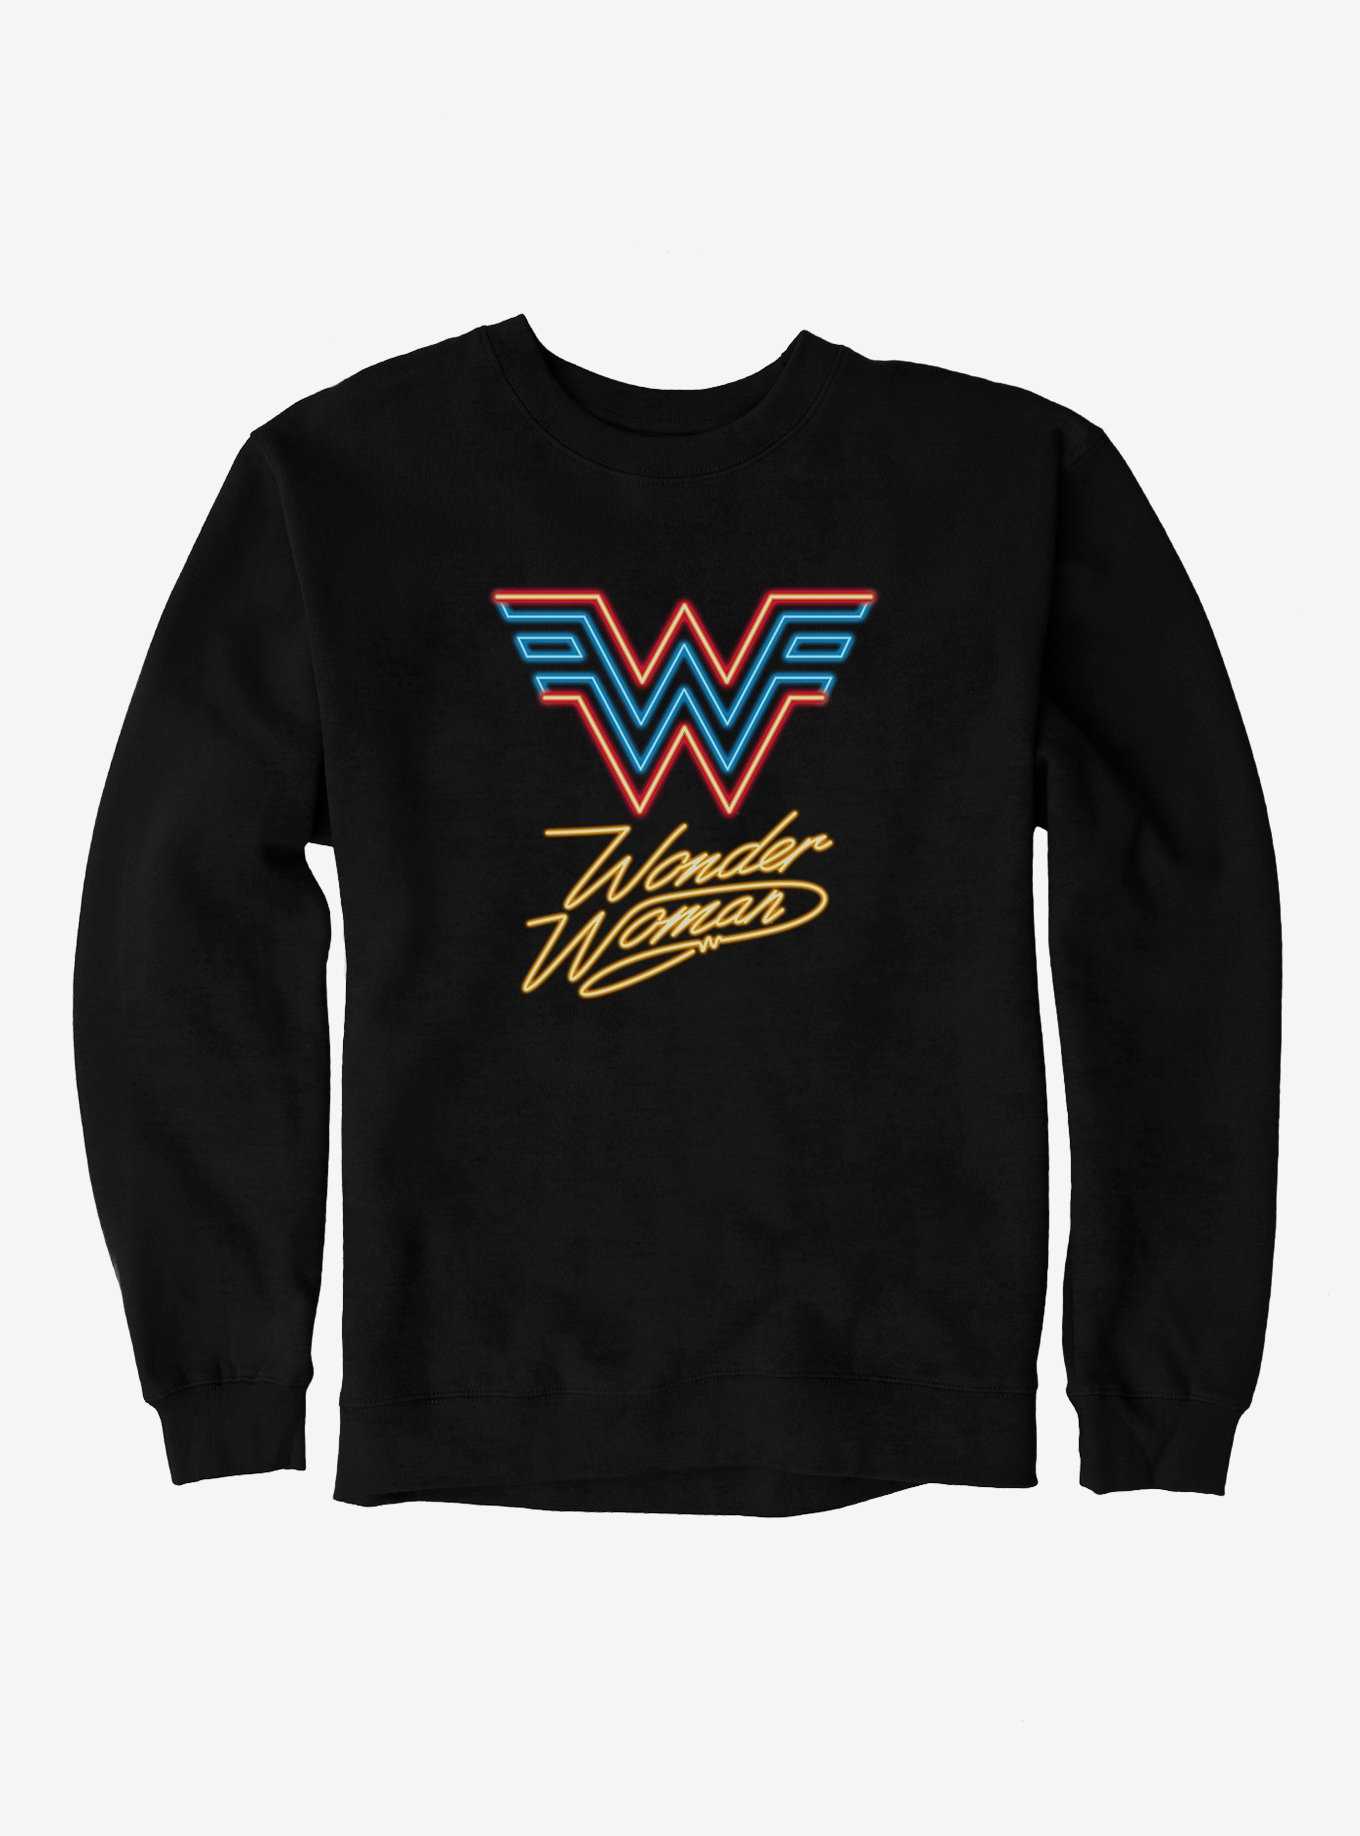 DC Comics Wonder Woman 1984 Neon Throwback Sweatshirt, , hi-res